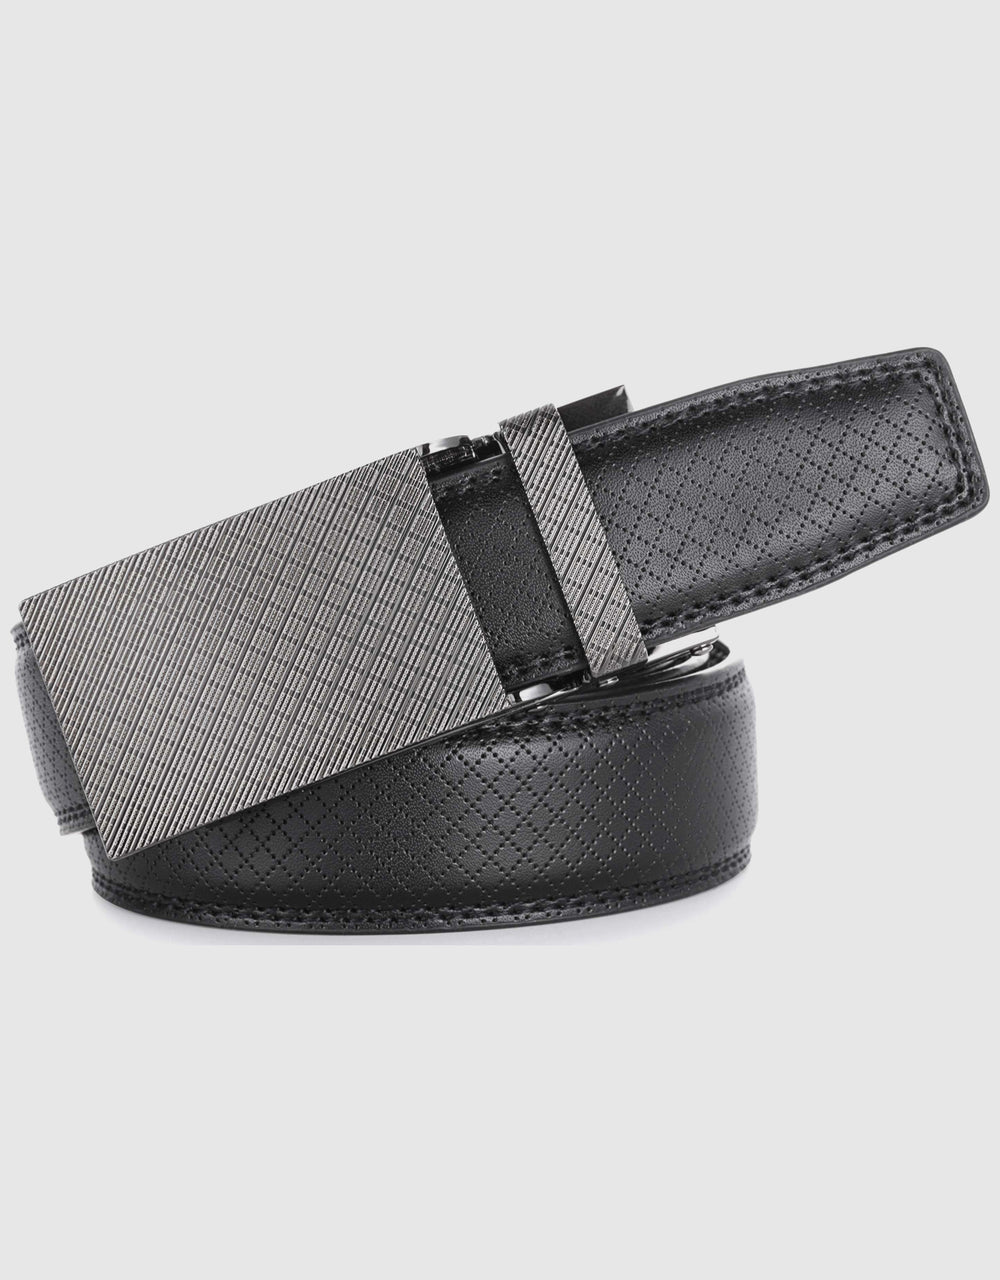 Leather Ratchet Belt for Men Adjustable Dress Belt with Click Sliding  Buckle : : Clothing, Shoes & Accessories